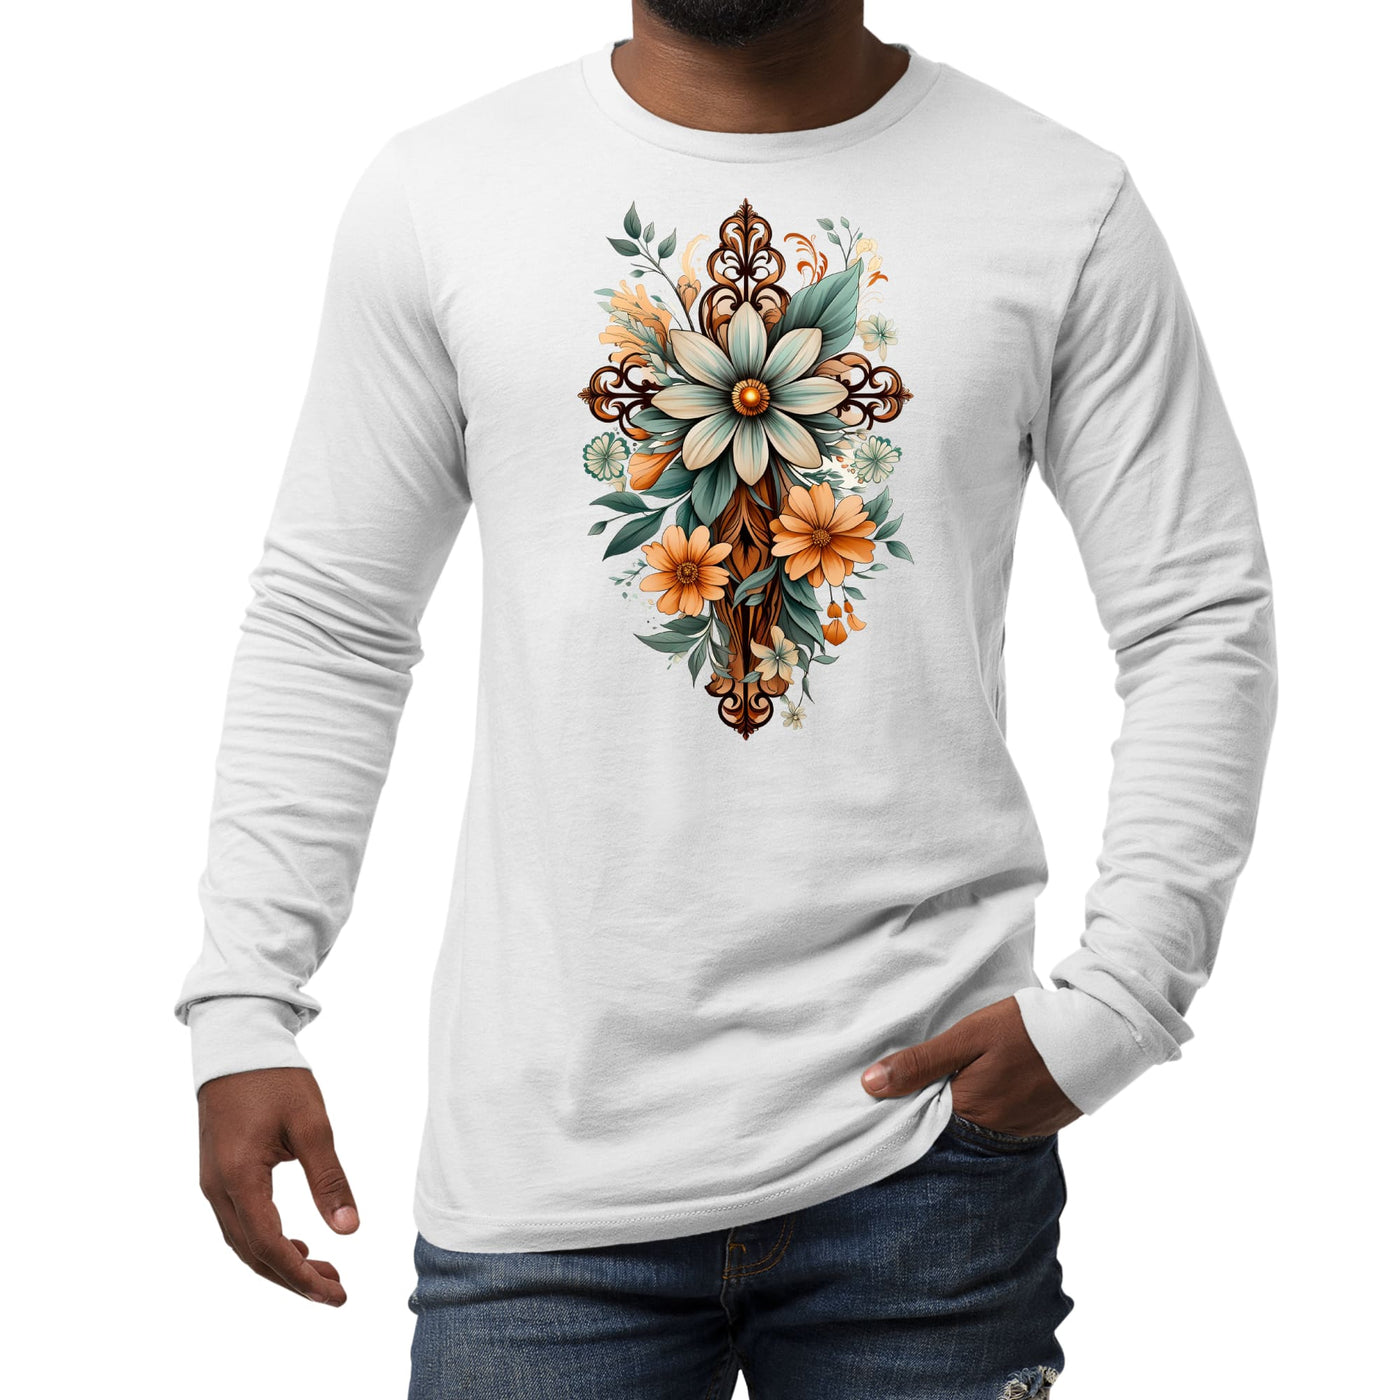 Mens Long Sleeve Graphic T-shirt Christian Cross Floral Bouquet - Unisex